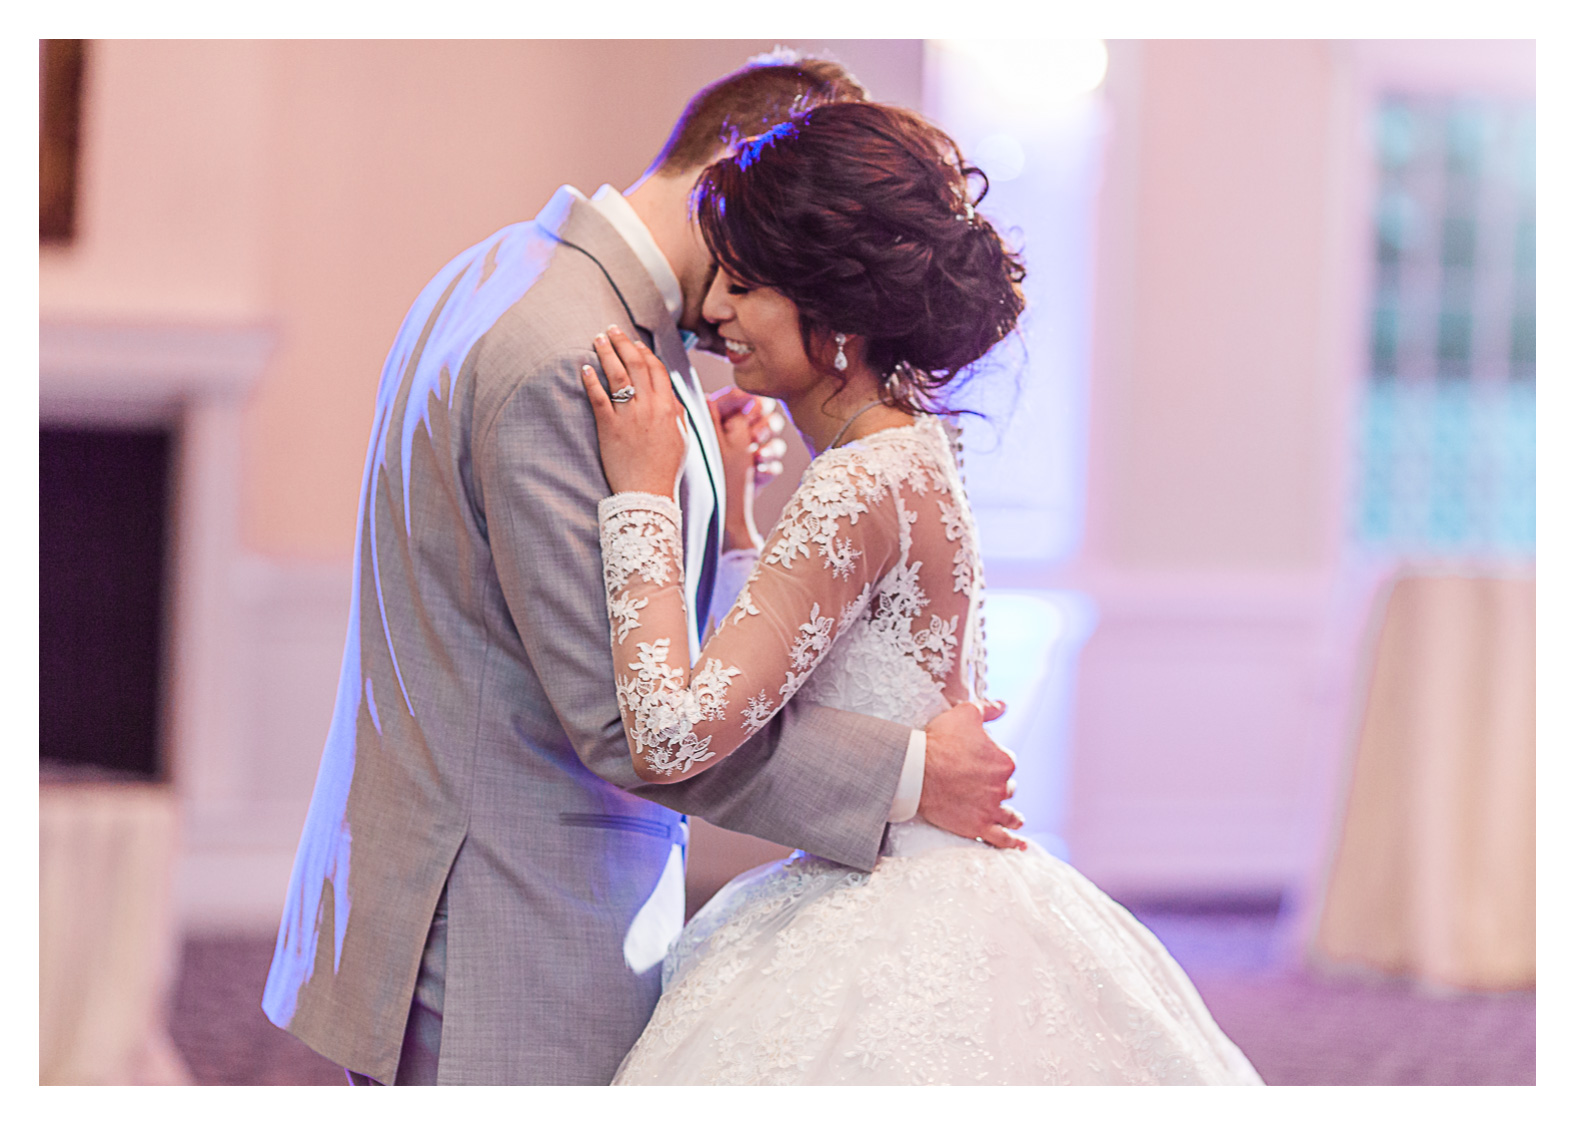 manassas-virginia-wedding-reception-foxchase-manor-bride-groom-first-dance-pink-intimate-smiles.jpg